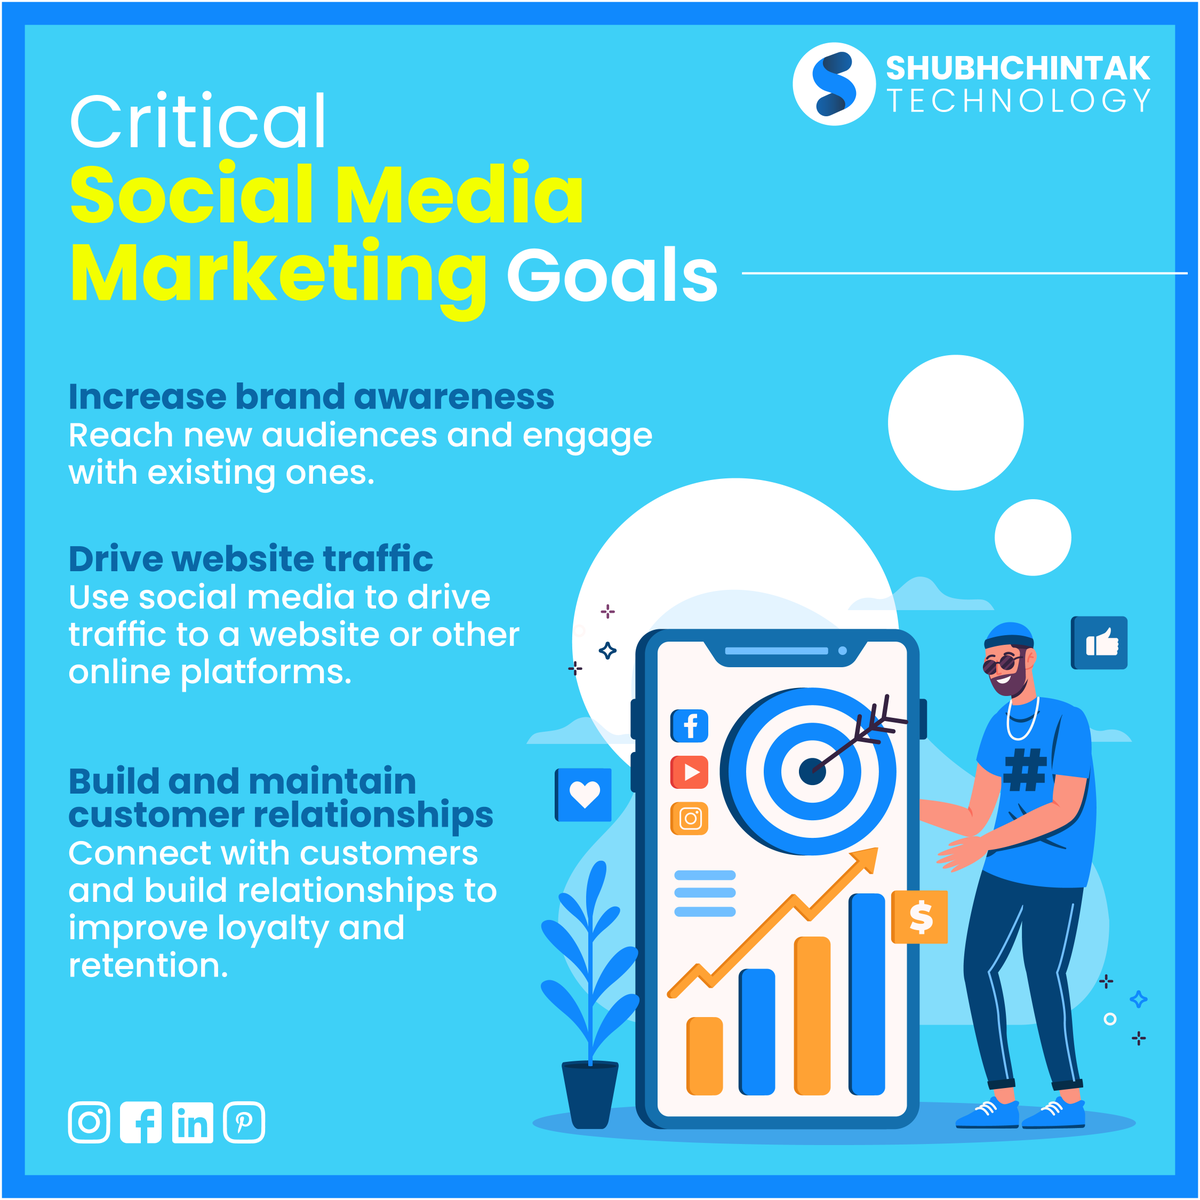 Your social media goals 🎯 should always align with your overall business objectives 🚀. #social media marketing #socialmediagoals #digitalmarketing #Shubhchintaktechnology #digitalagency #webagency